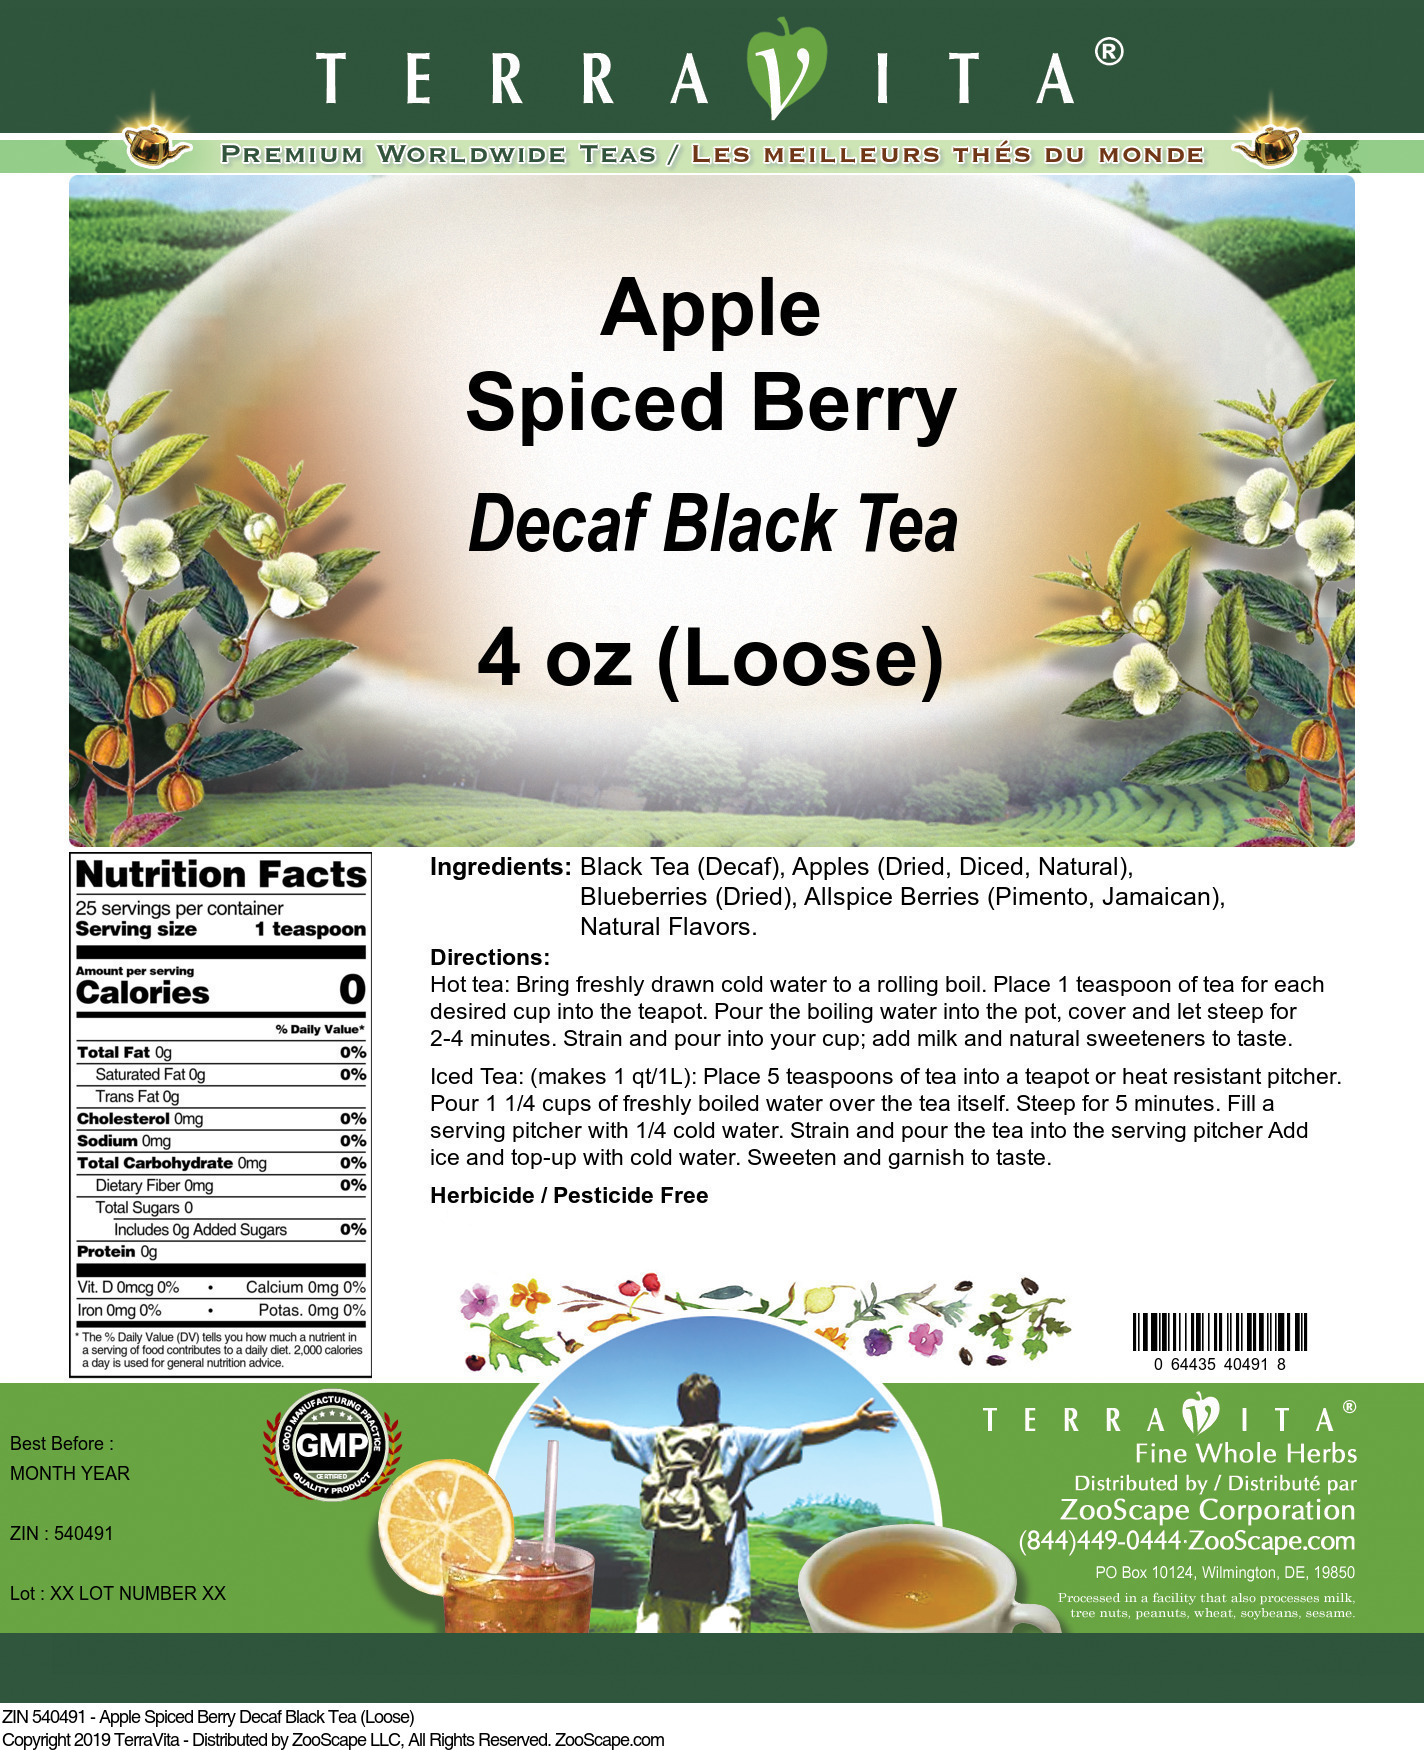 Apple Spiced Berry Decaf Black Tea (Loose) - Label